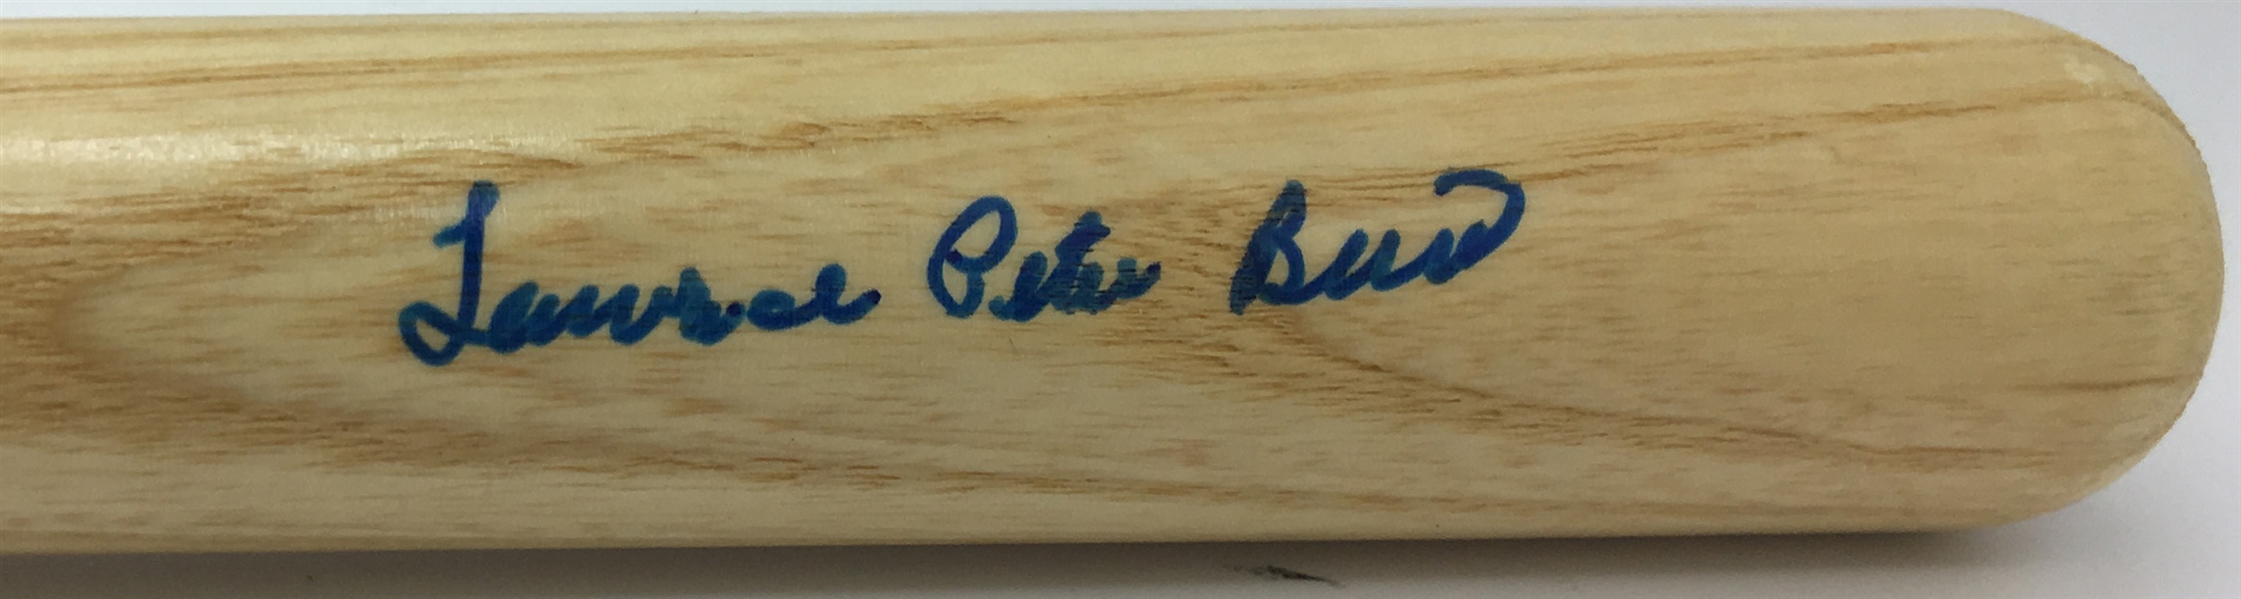 Yogi Berra Signed Mini Baseball Bat w/ Full Name "Lawrence Peter Berra" Autograph! (JSA)